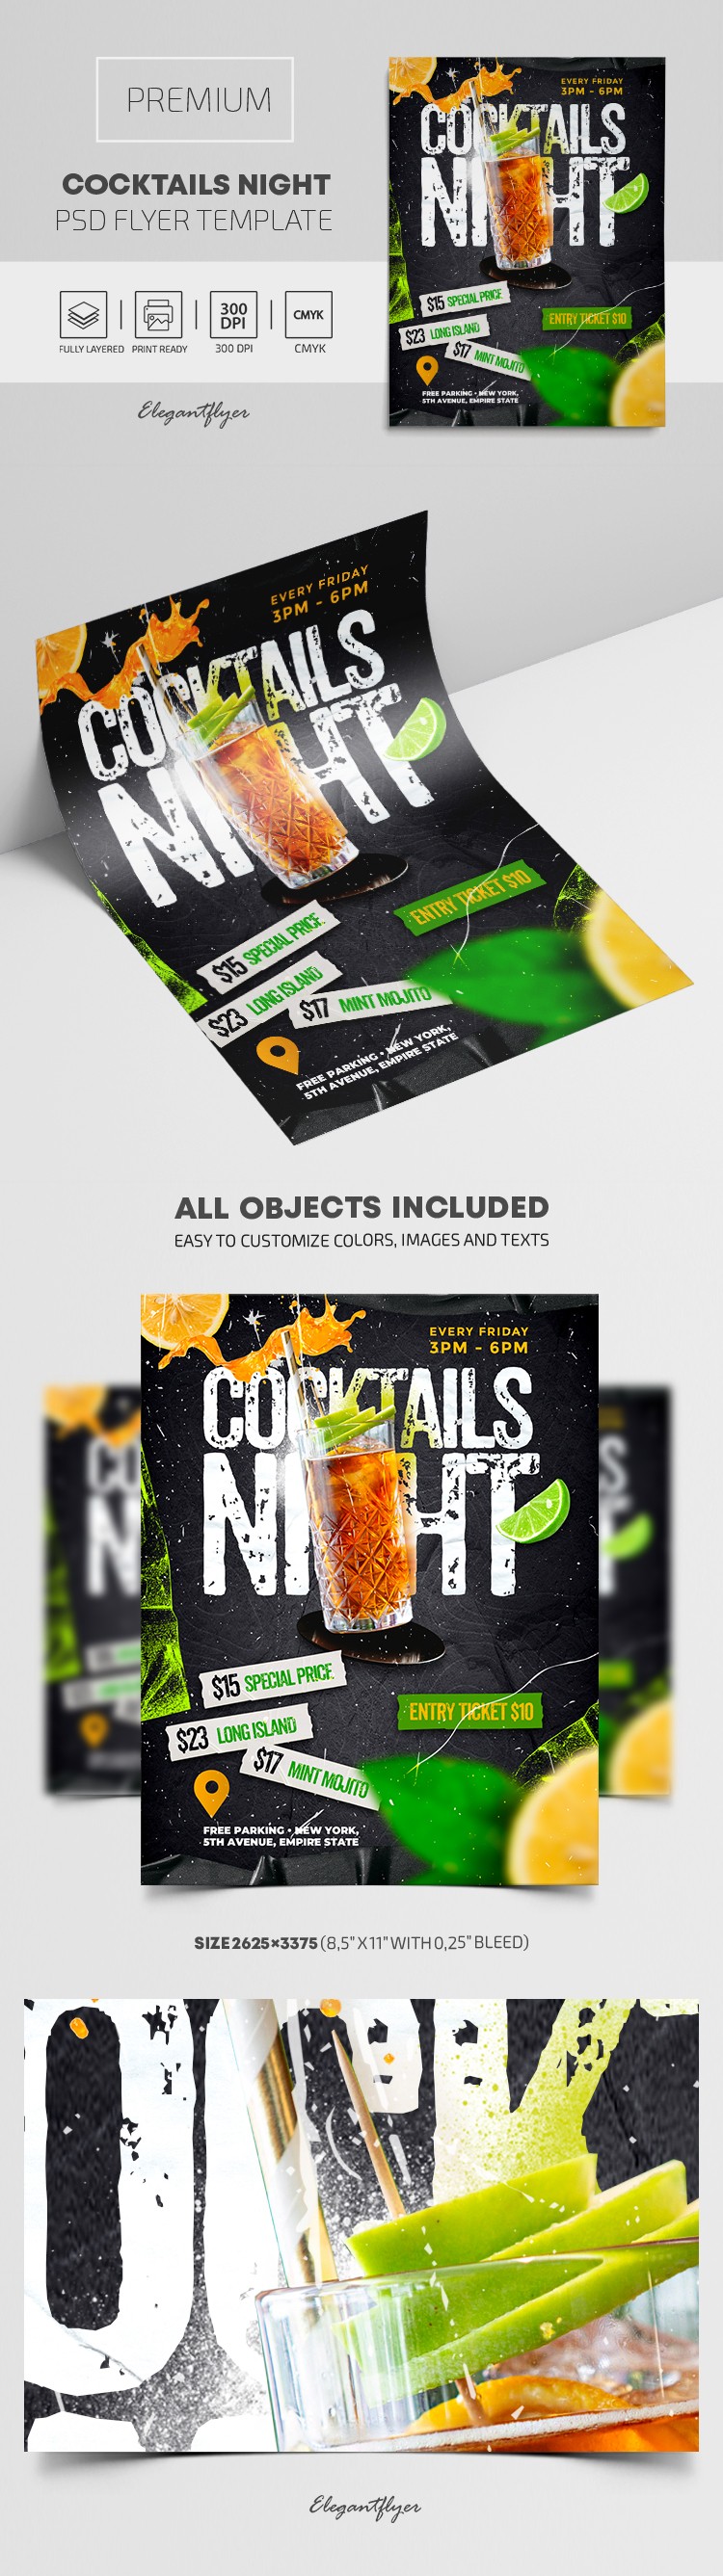 Cocktails Night Flyer by ElegantFlyer